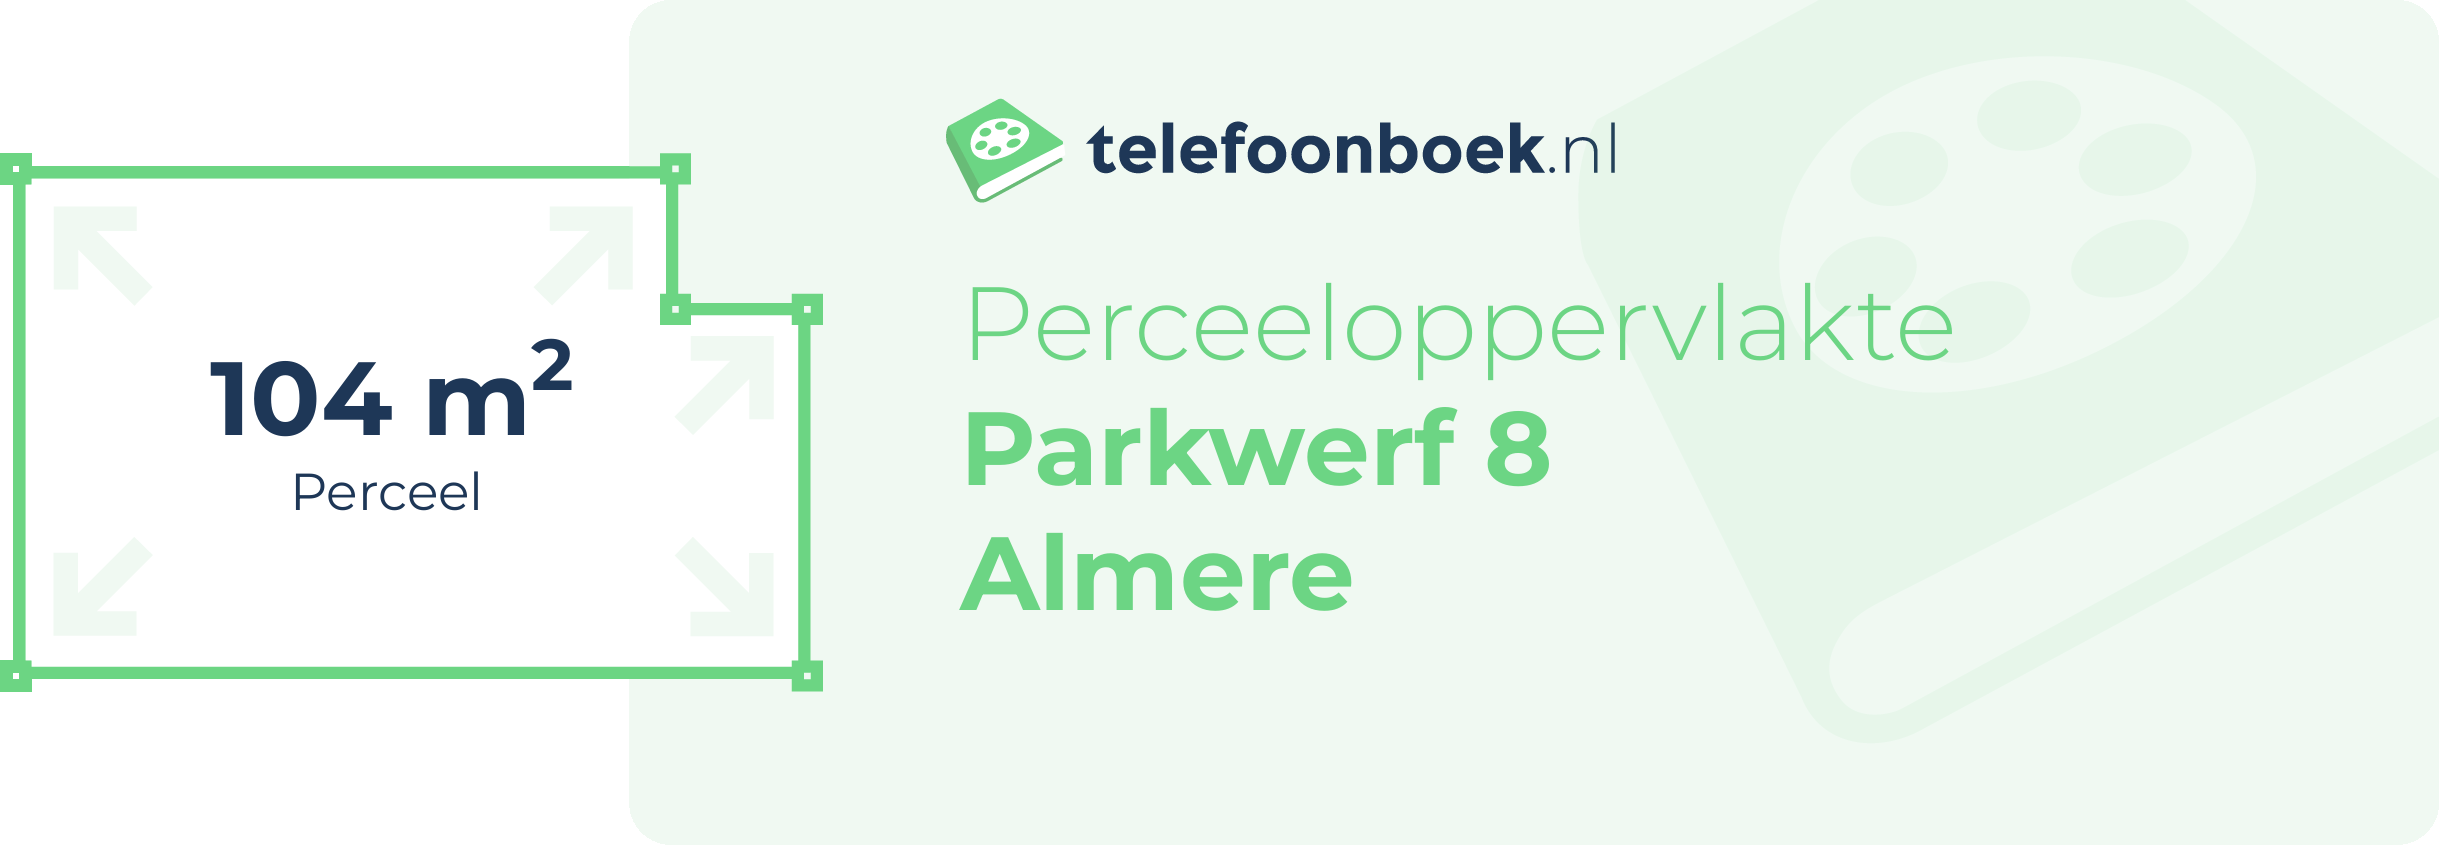 Perceeloppervlakte Parkwerf 8 Almere